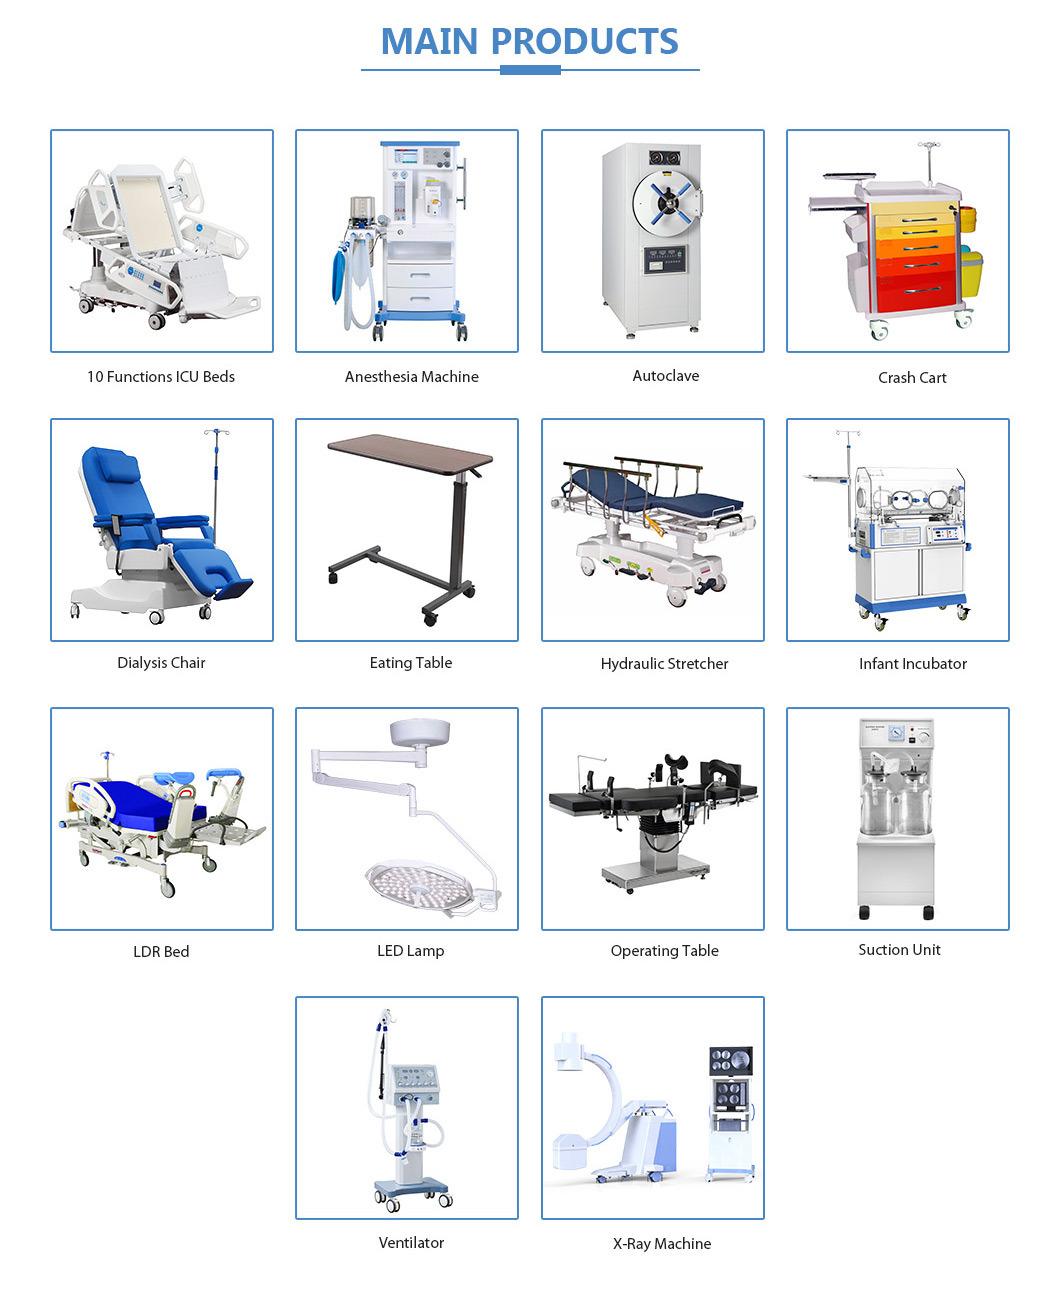 Mn-Ywj001 Medical Rehabilitation Foldable Manual Transfer Chair